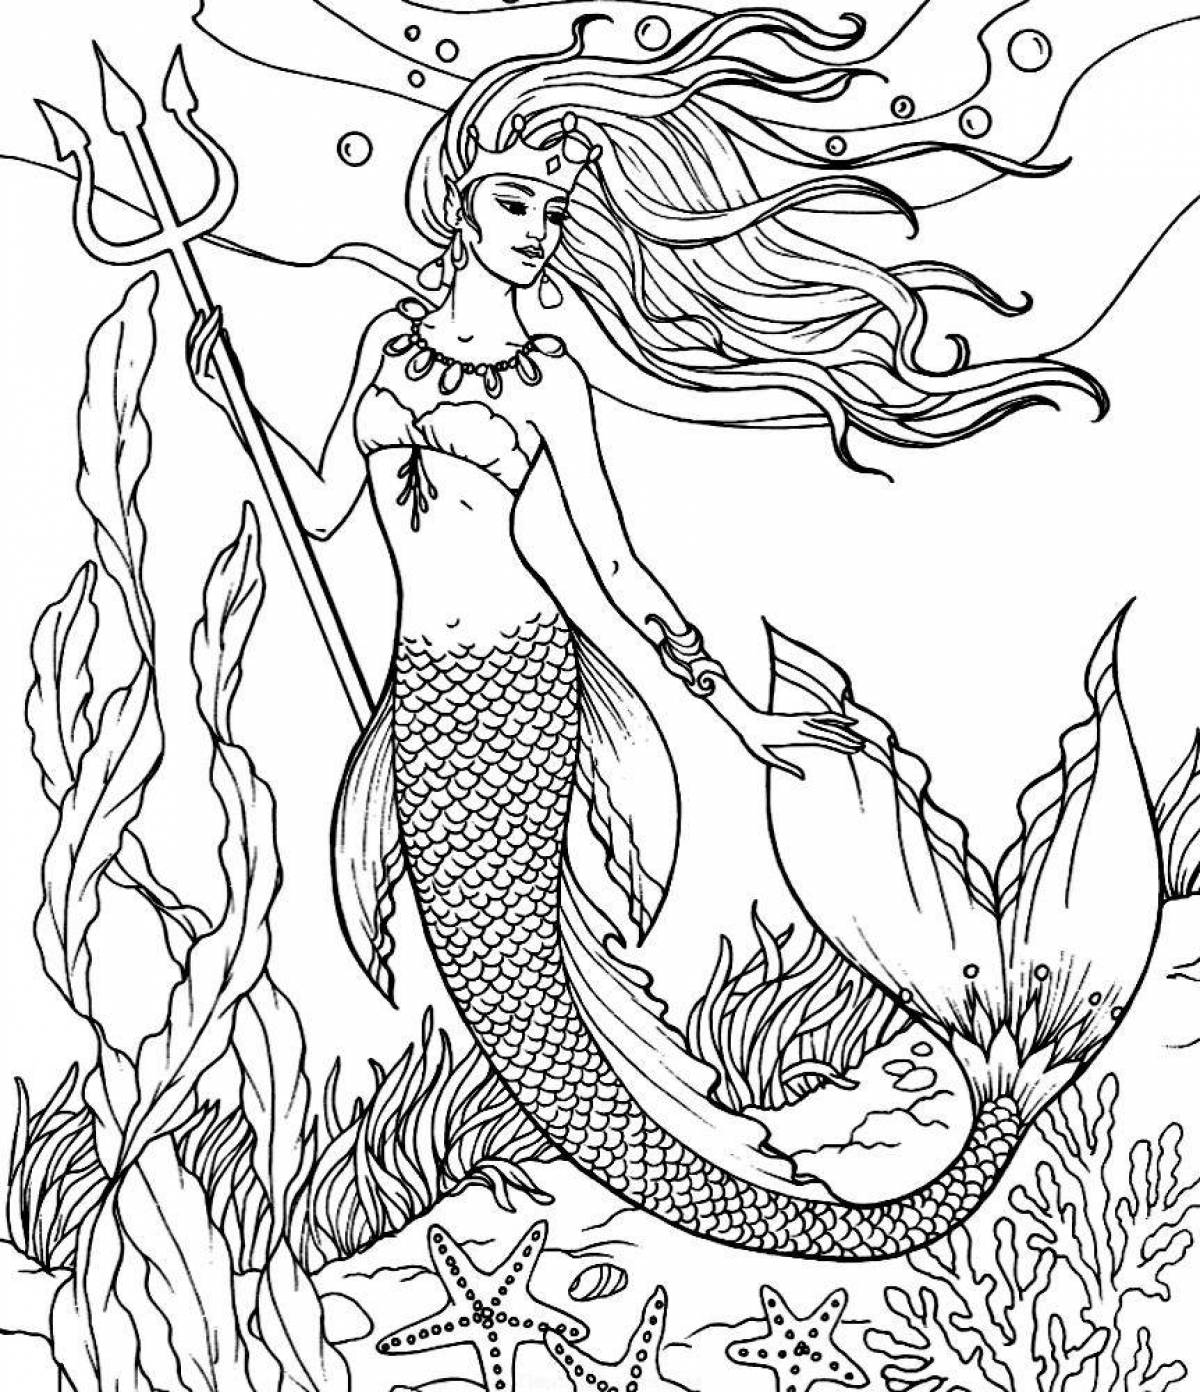 Major coloring drawing of a mermaid